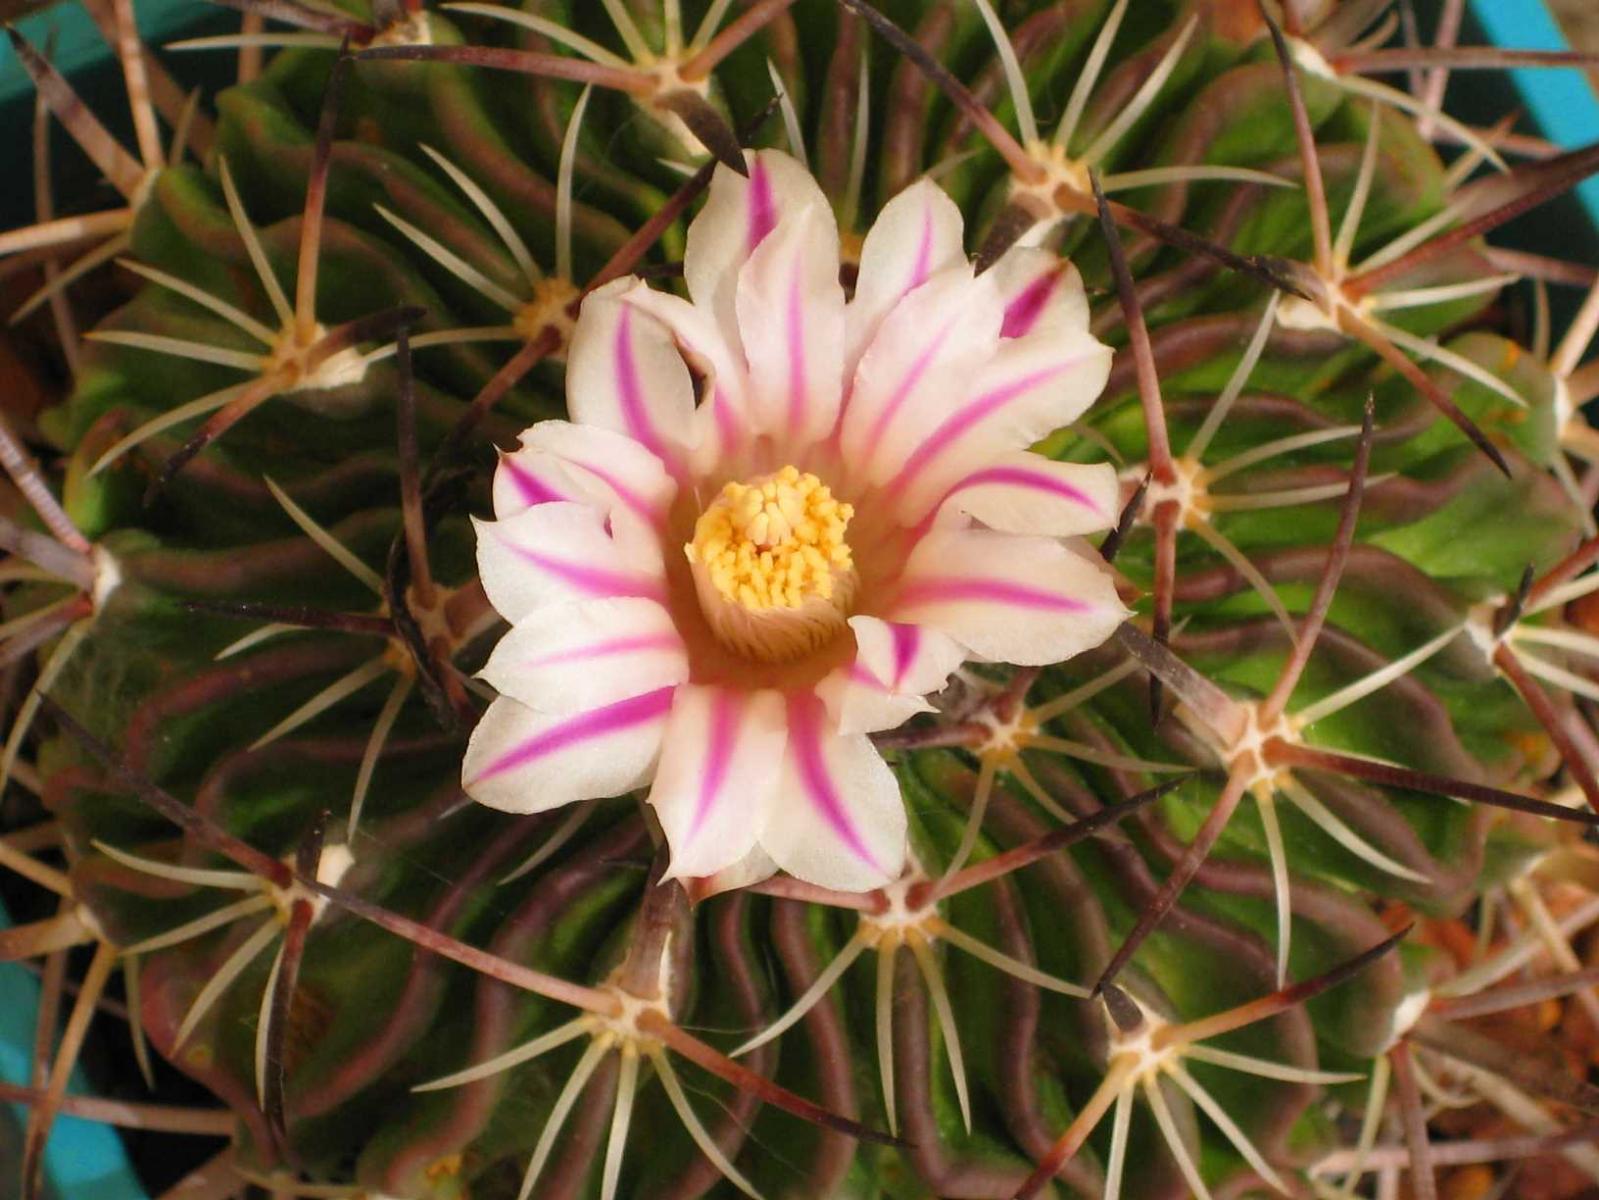 Stenocactus flower